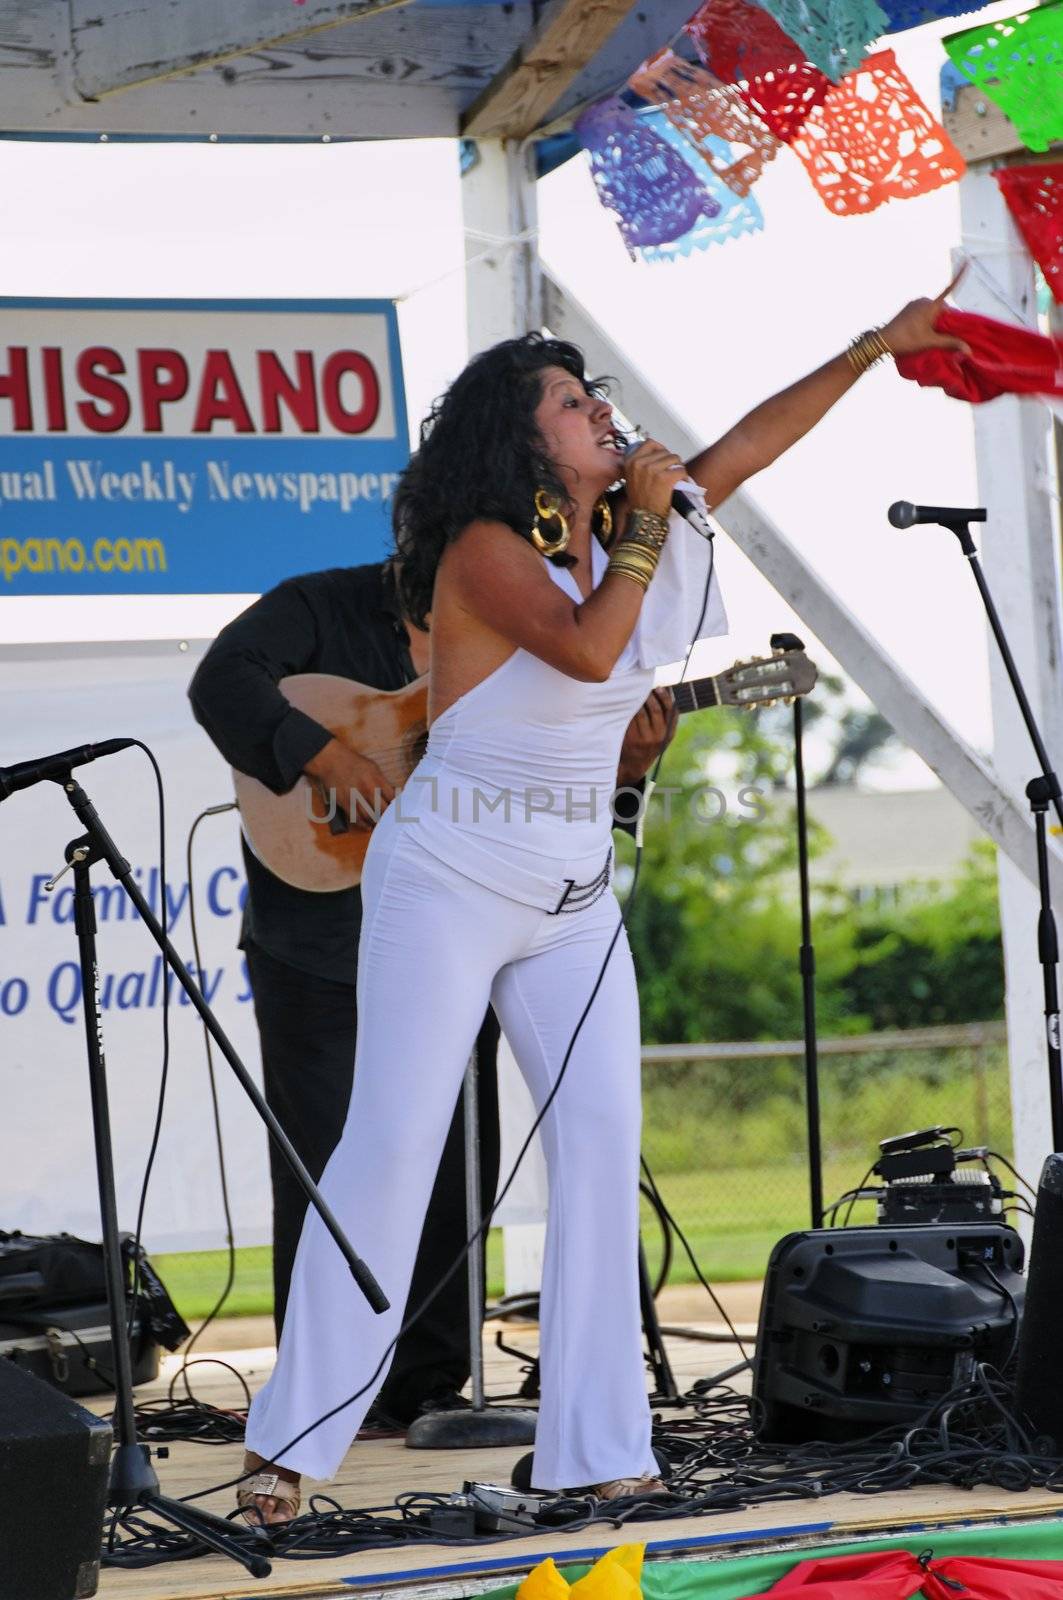 Festivo Hispano 2008, Millsboro, Delaware.  Festivo Hispano is an annual Spanish language cultural festival featuring traditional music and dance.